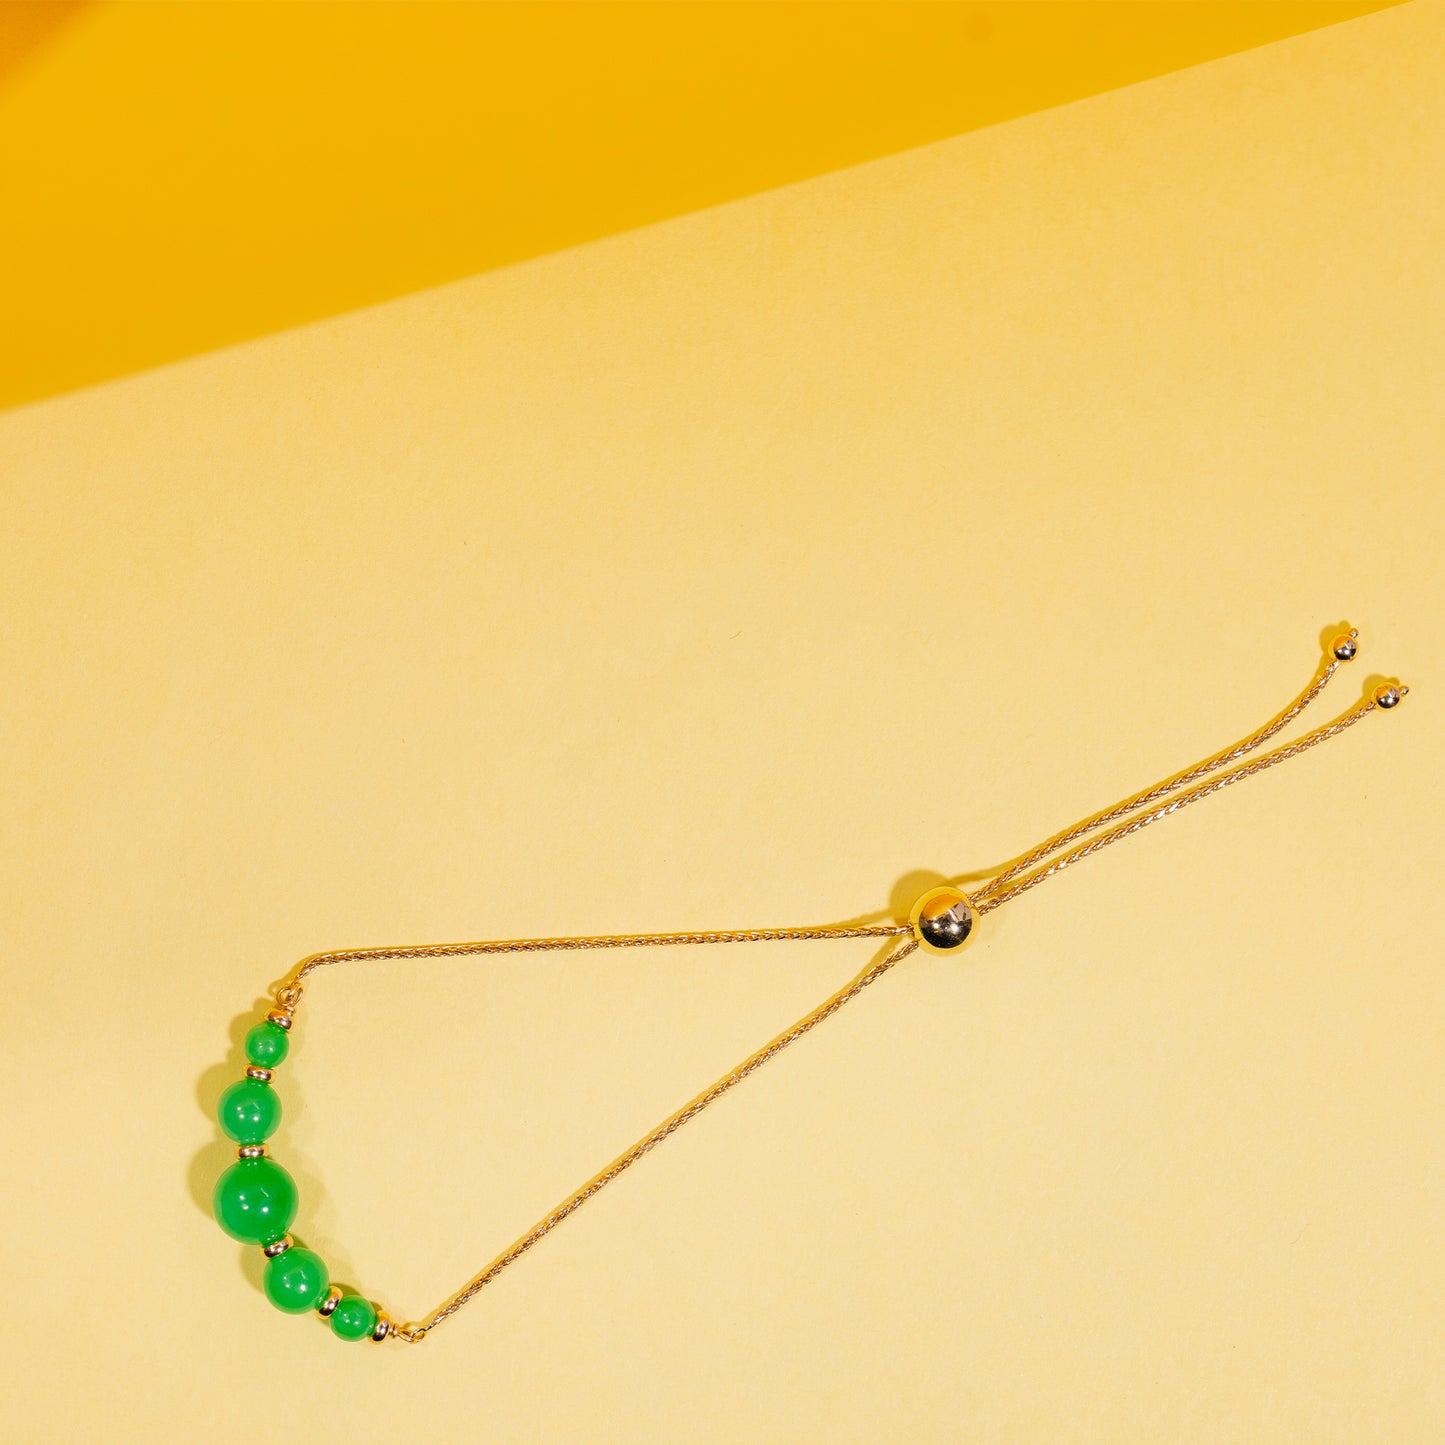 14k Adjustable Bracelet Black Onyx or Green Jade 9.75"